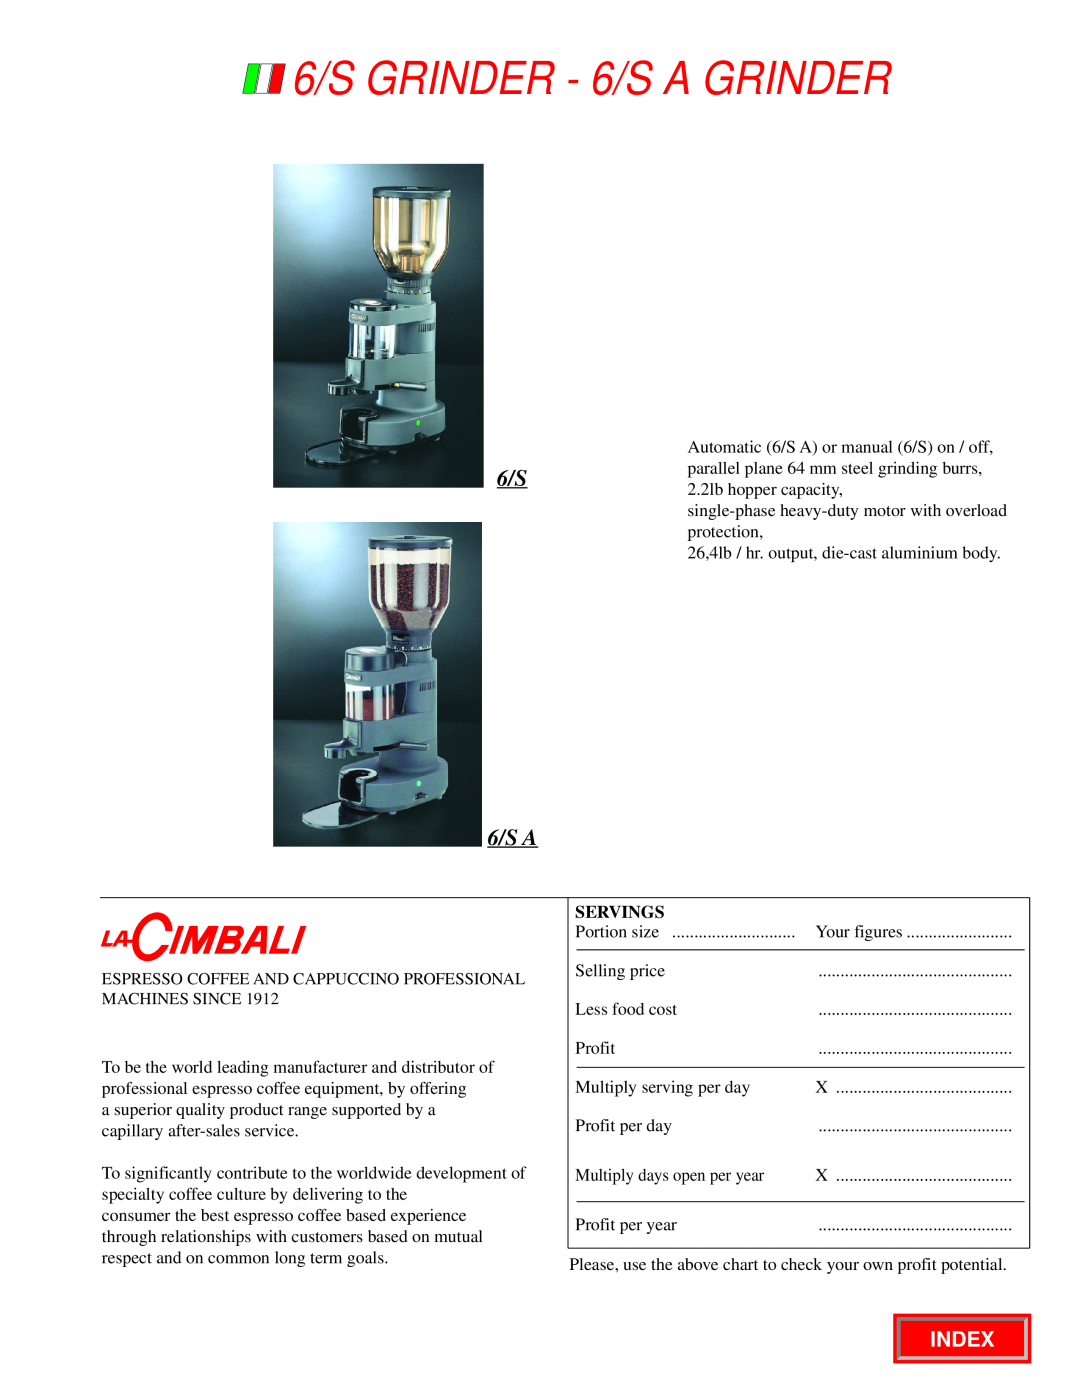 Pasquini Espresso Company manual 6/S GRINDER - 6/S A GRINDER, 6/S 6/S A, Index, Servings 